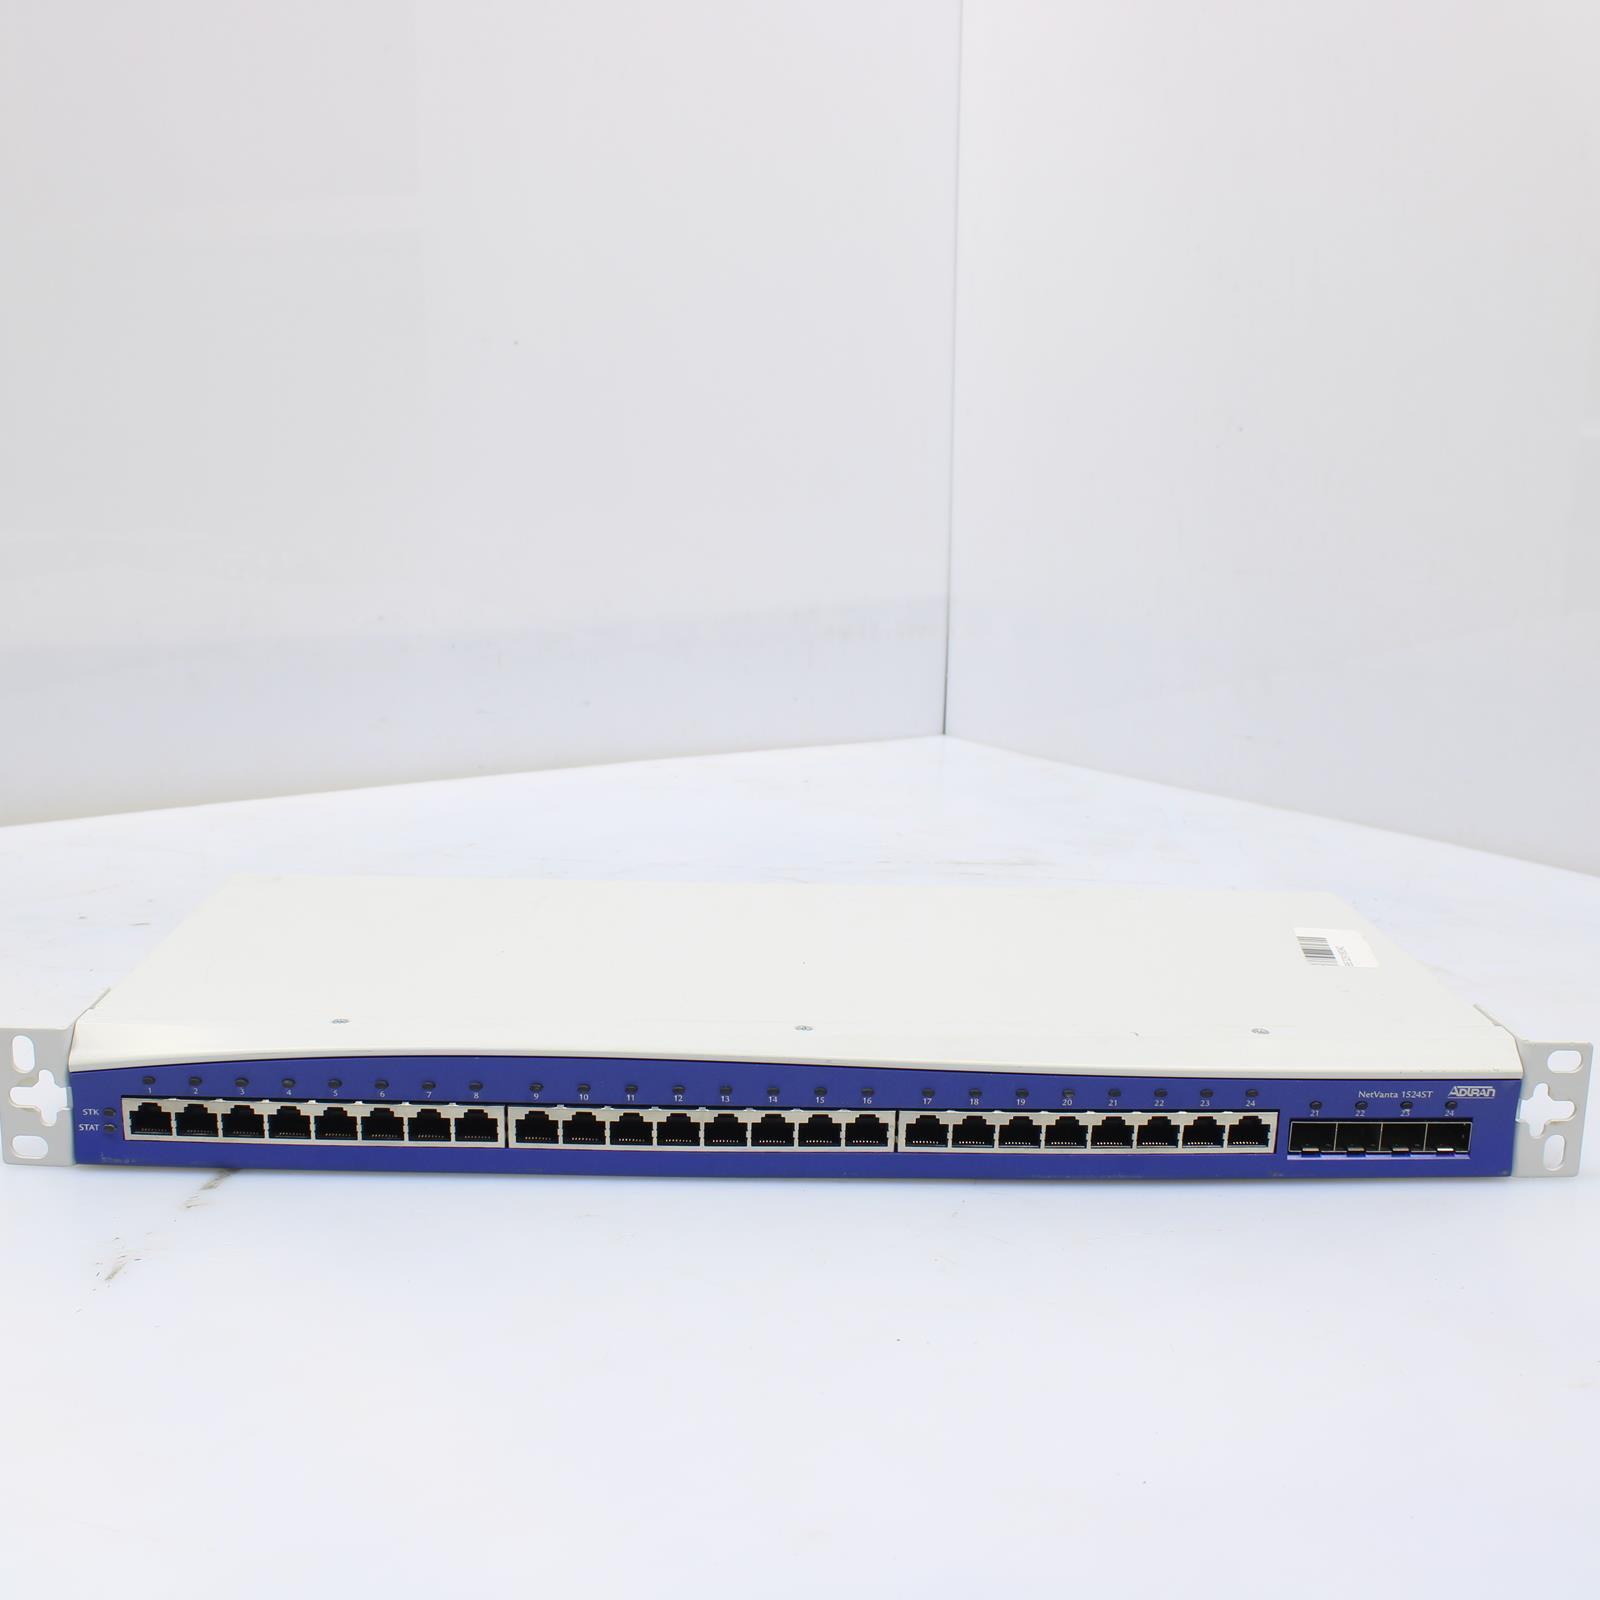 ADTRAN NETVANTA 1524ST 24-Port Ethernet Network Switch